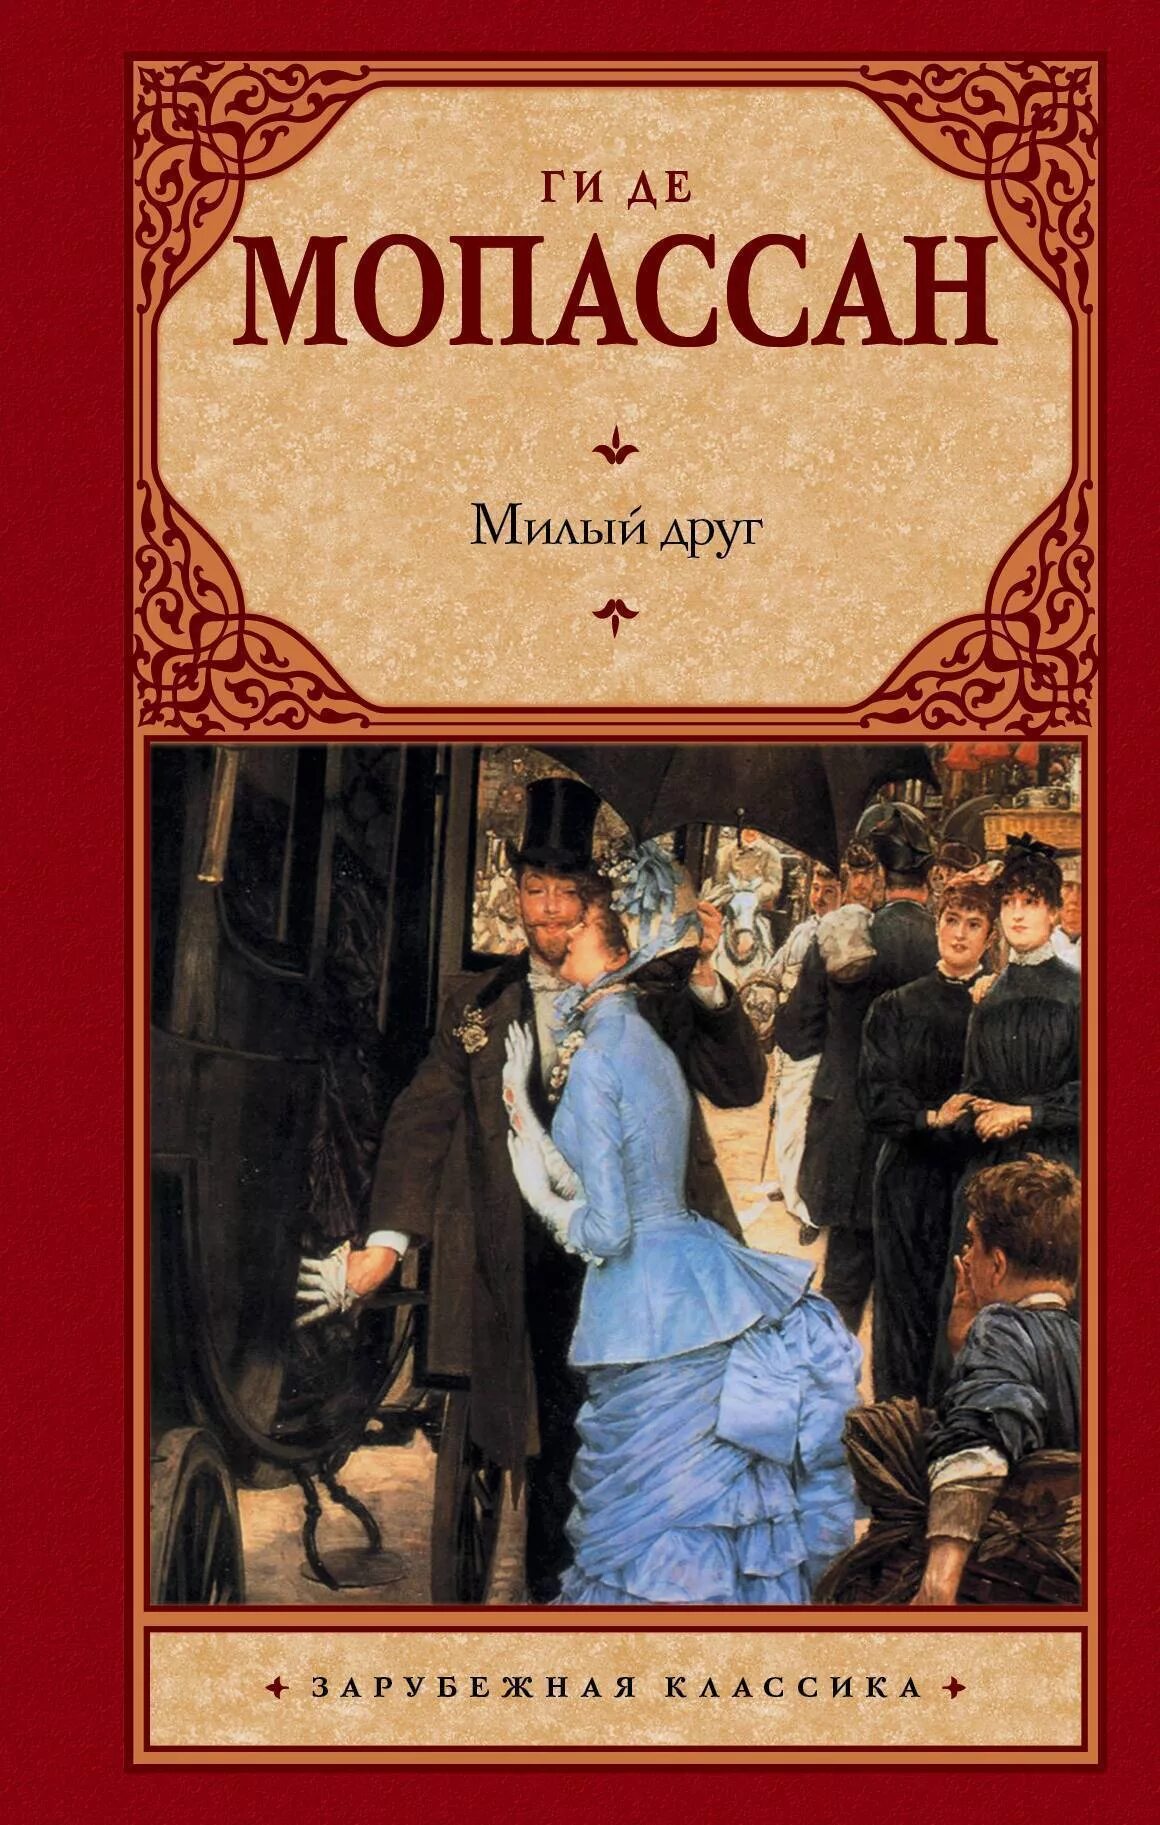 Ги де Мопассан "милый друг". Милый друг ги де Мопассан книга. Ги де Мопассан милый друг обложка книг.